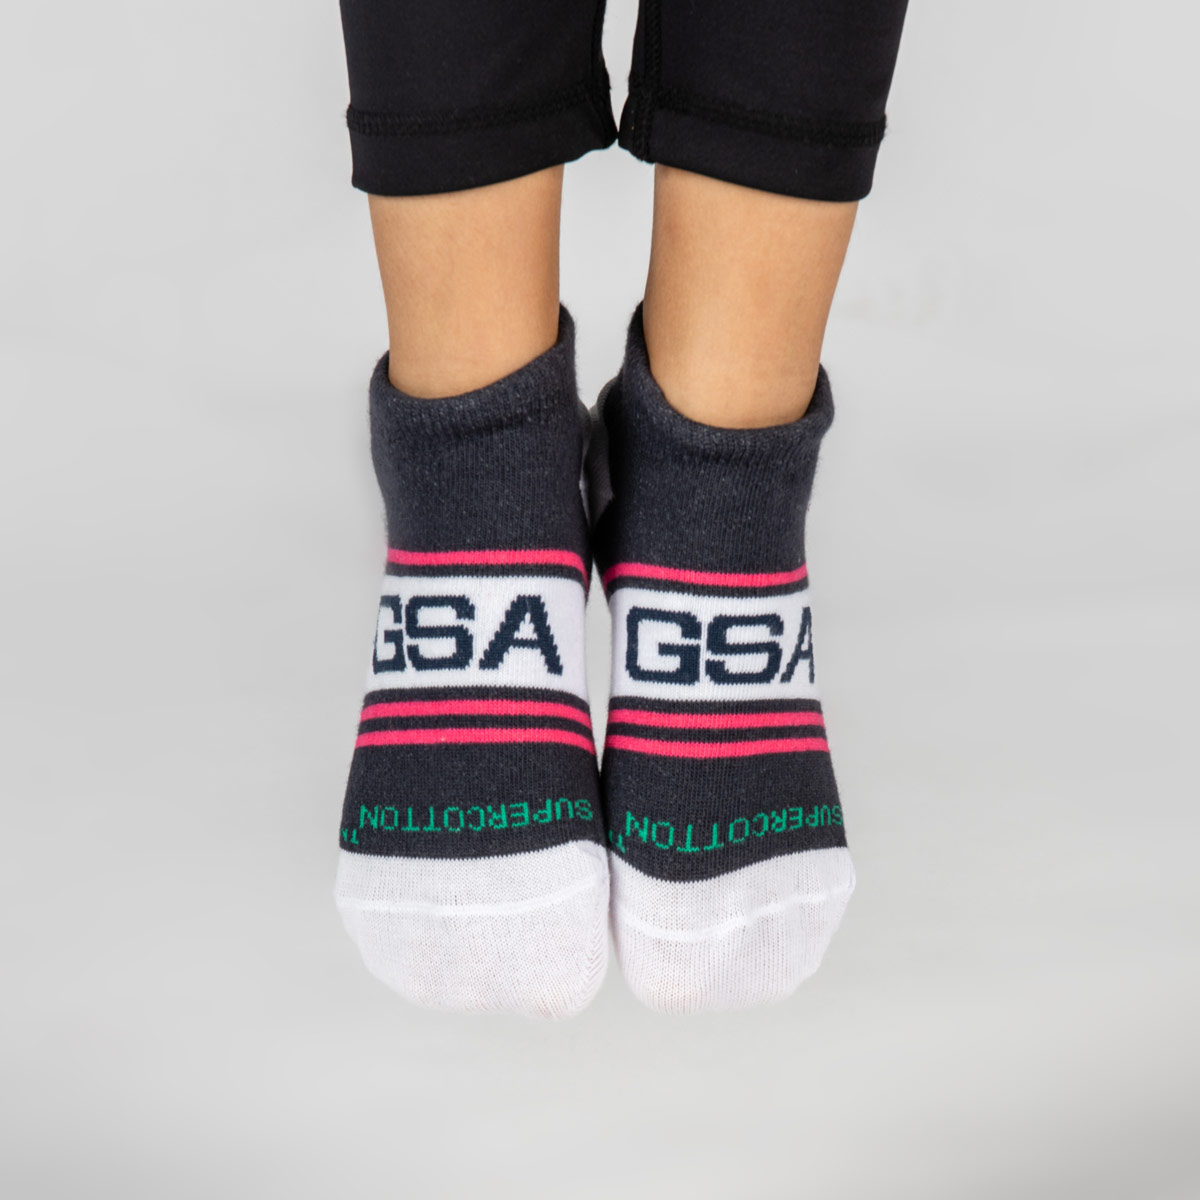 GSA Supercotton Kids Low Cut Socks Calzini Unisex-Bambini e Ragazzi 